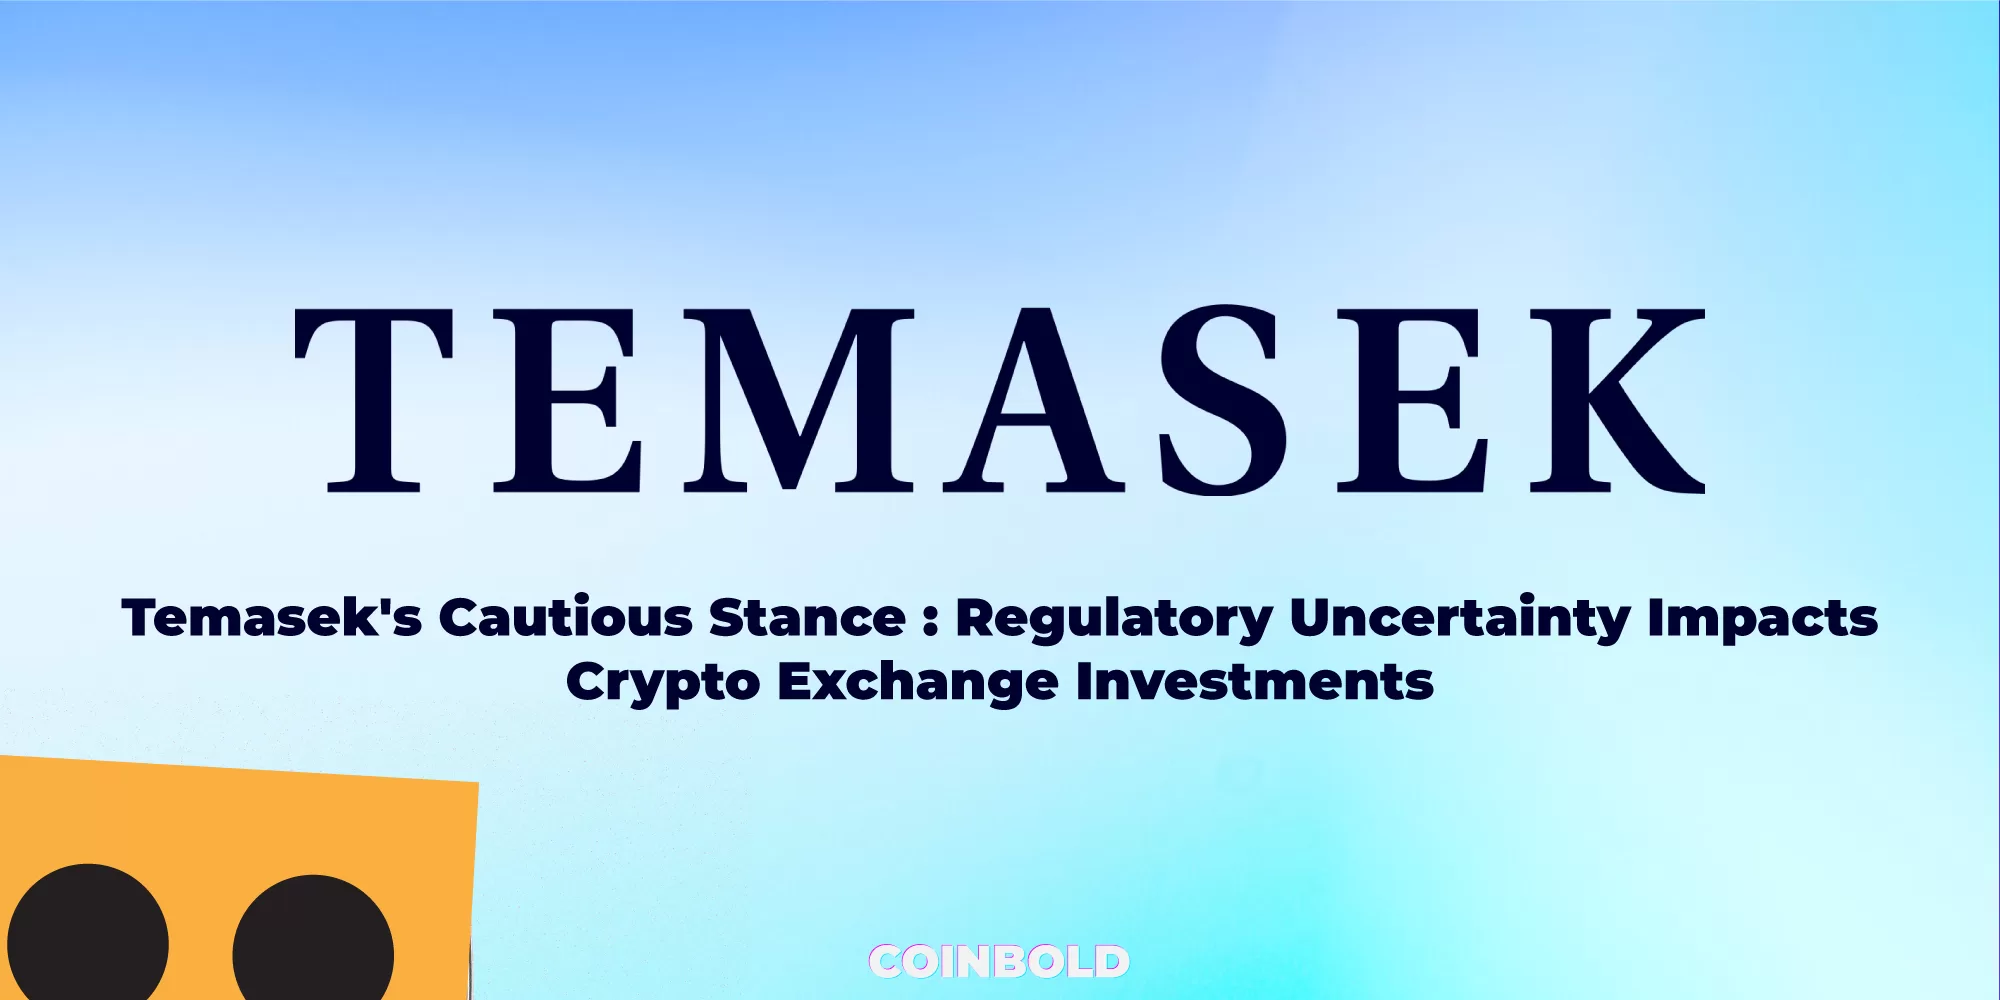 Temasek's Cautious Stance: Regulatory Uncertainty Impacts Crypto Exchange Investments